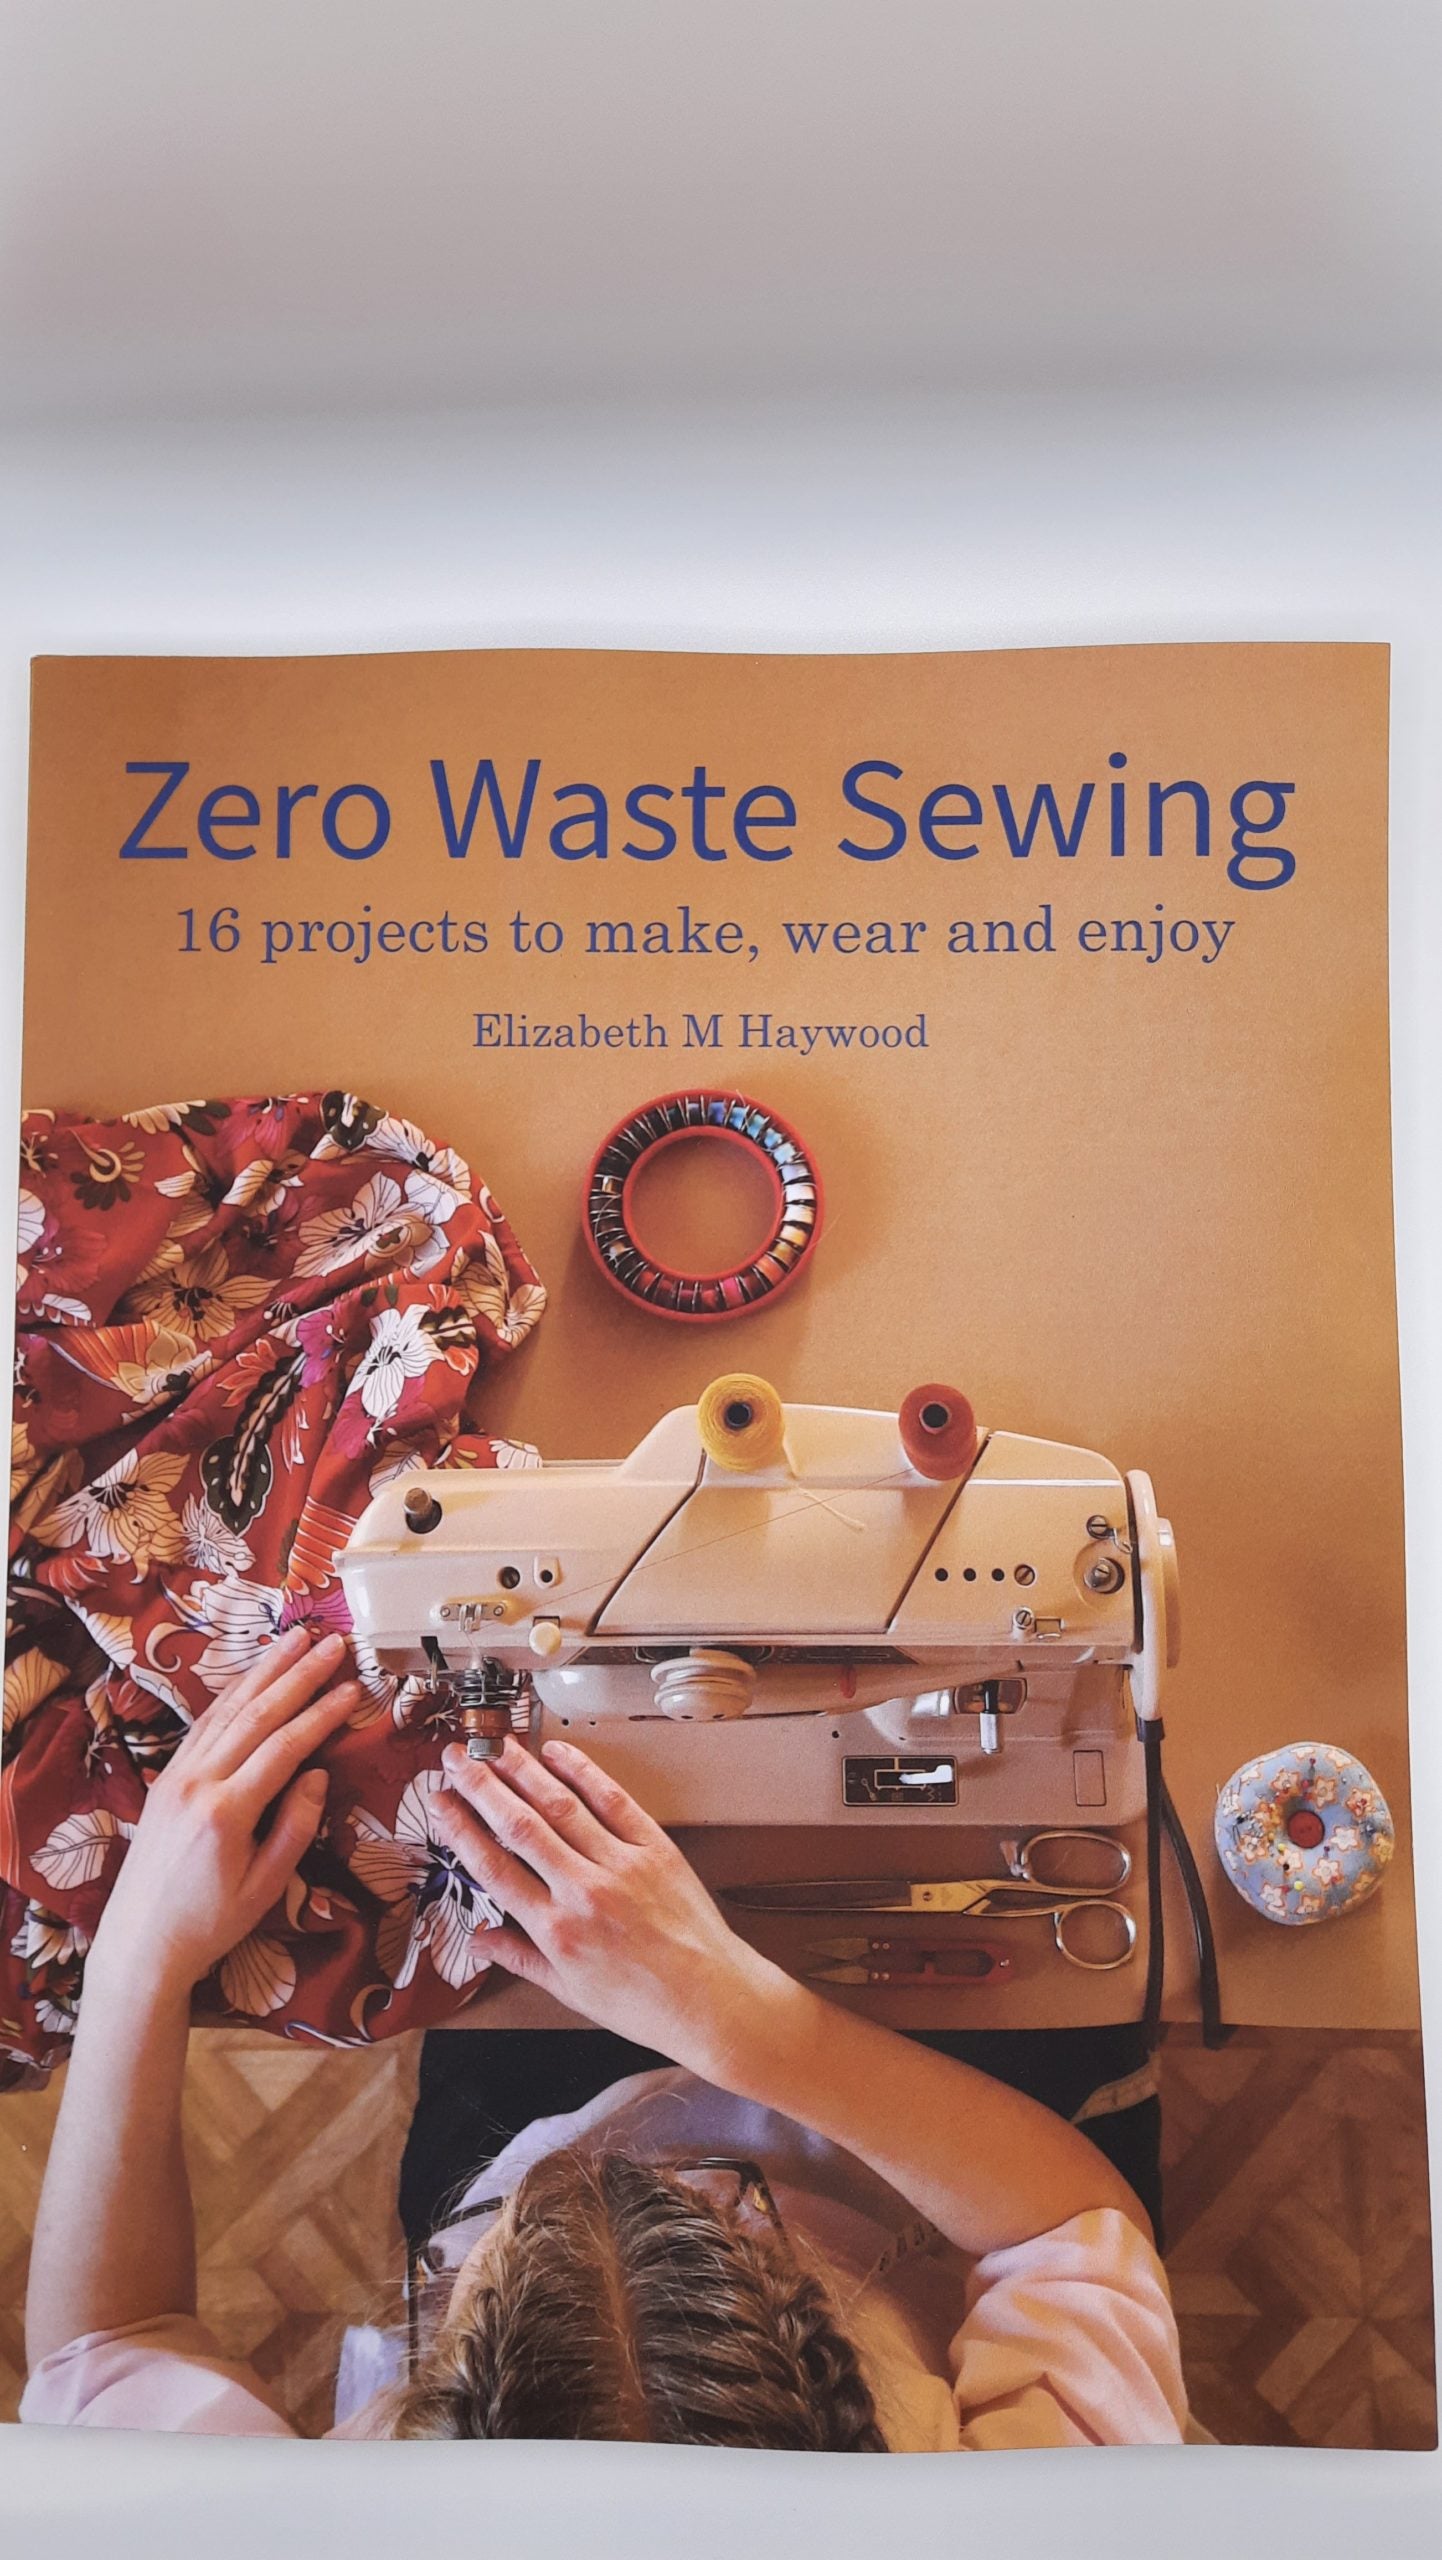 Zero Waste Sewing by Elizabeth M Haywood